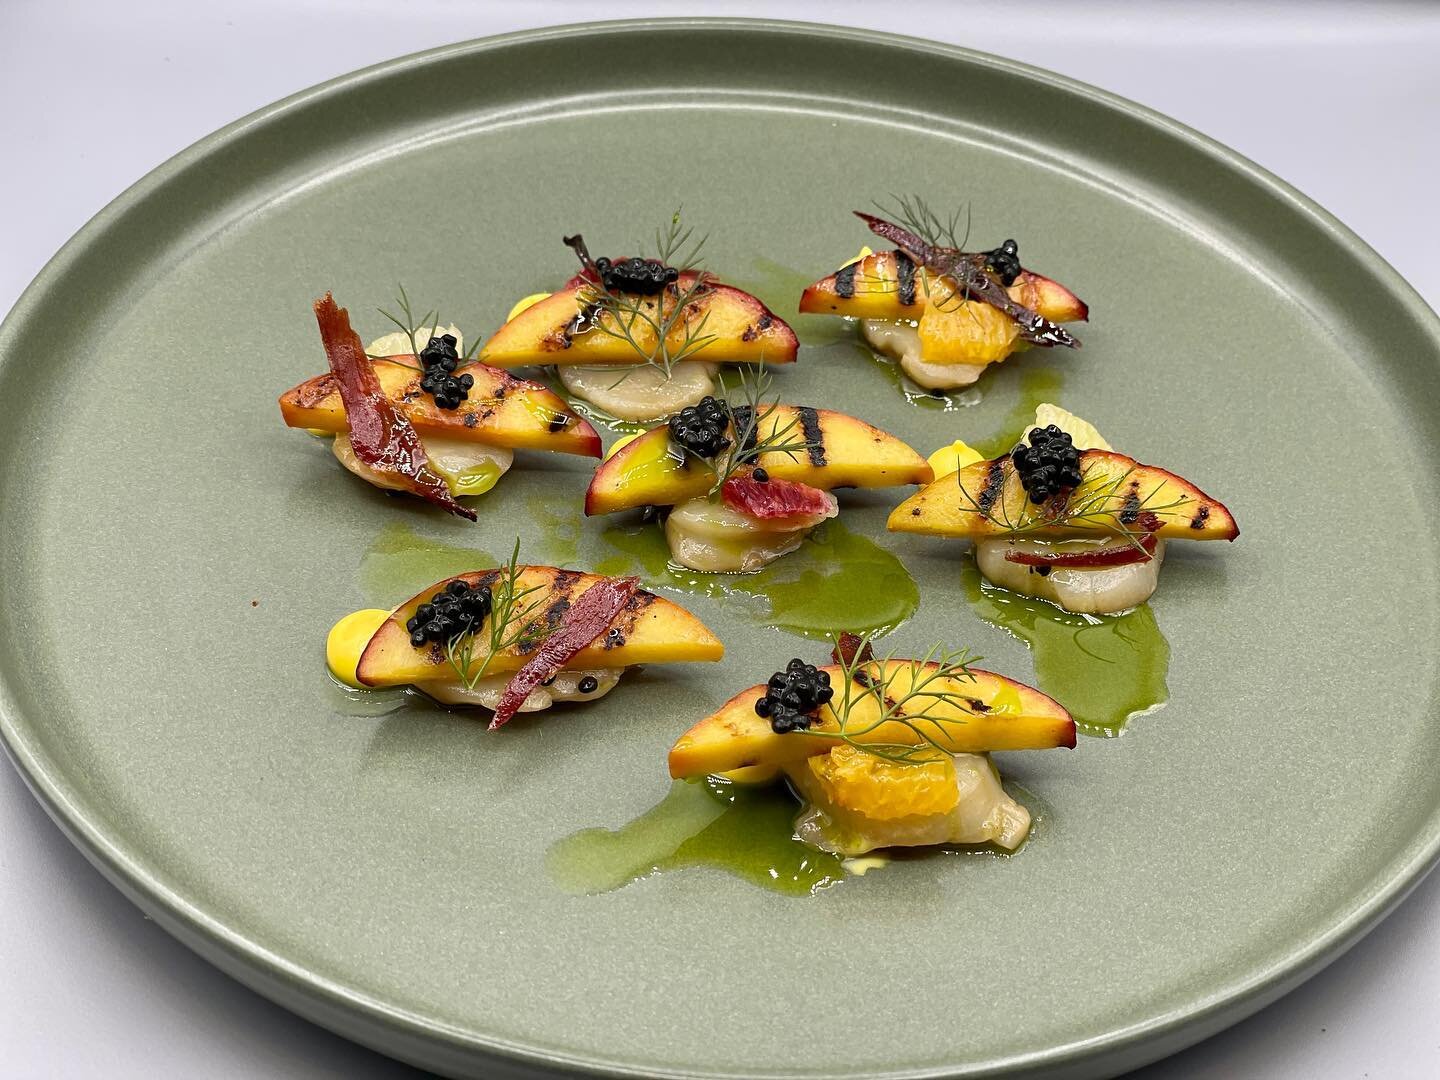 #scallops #peach #caviar #grapfruit #prosciutto #chef #cheflife #foodphotography #food